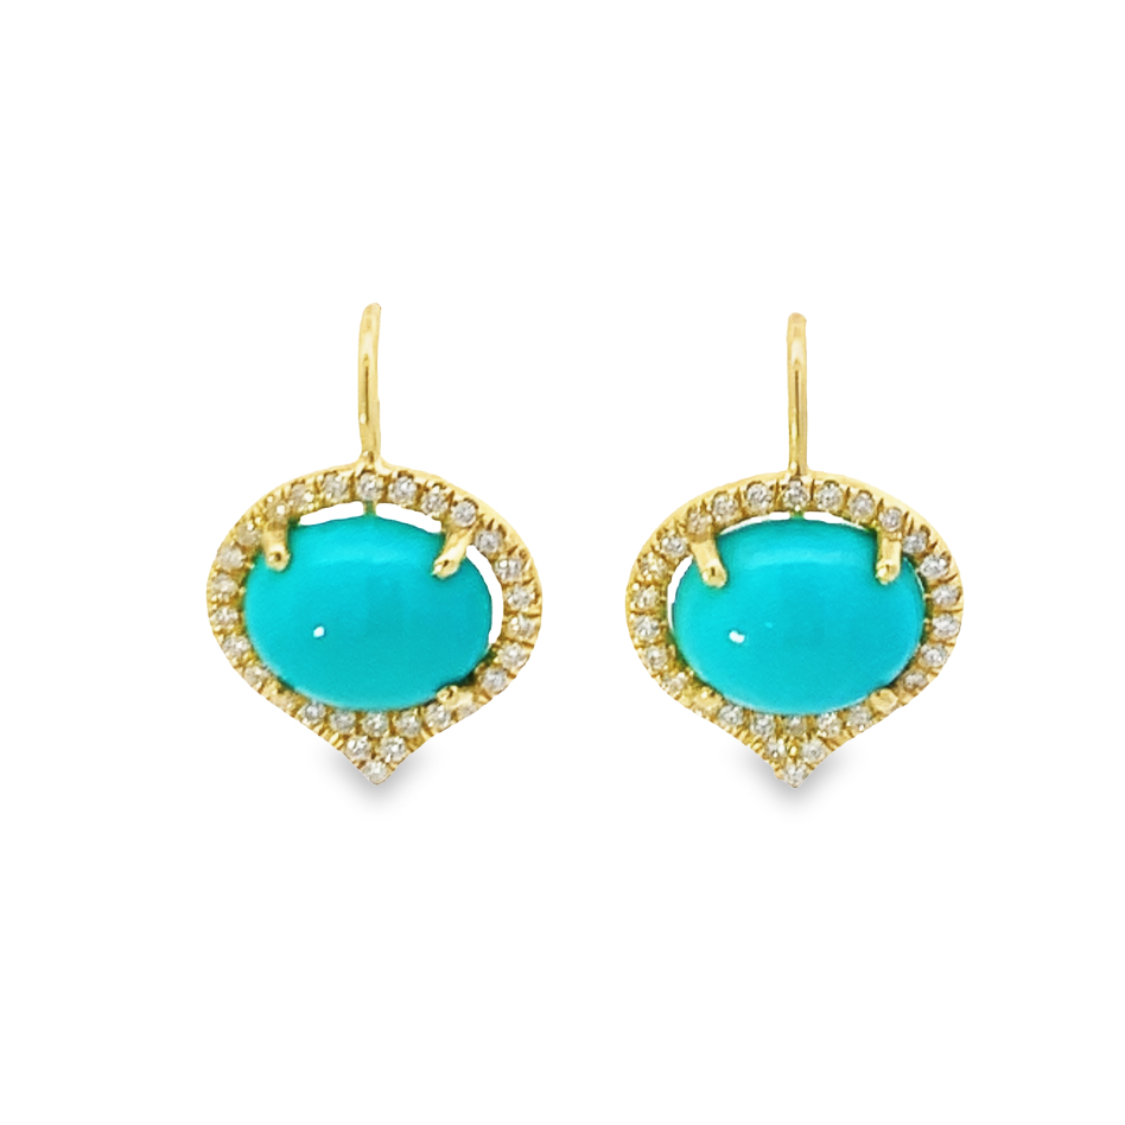 Lauren K 18K Yellow Gold Turquoise and Diamond Earrings